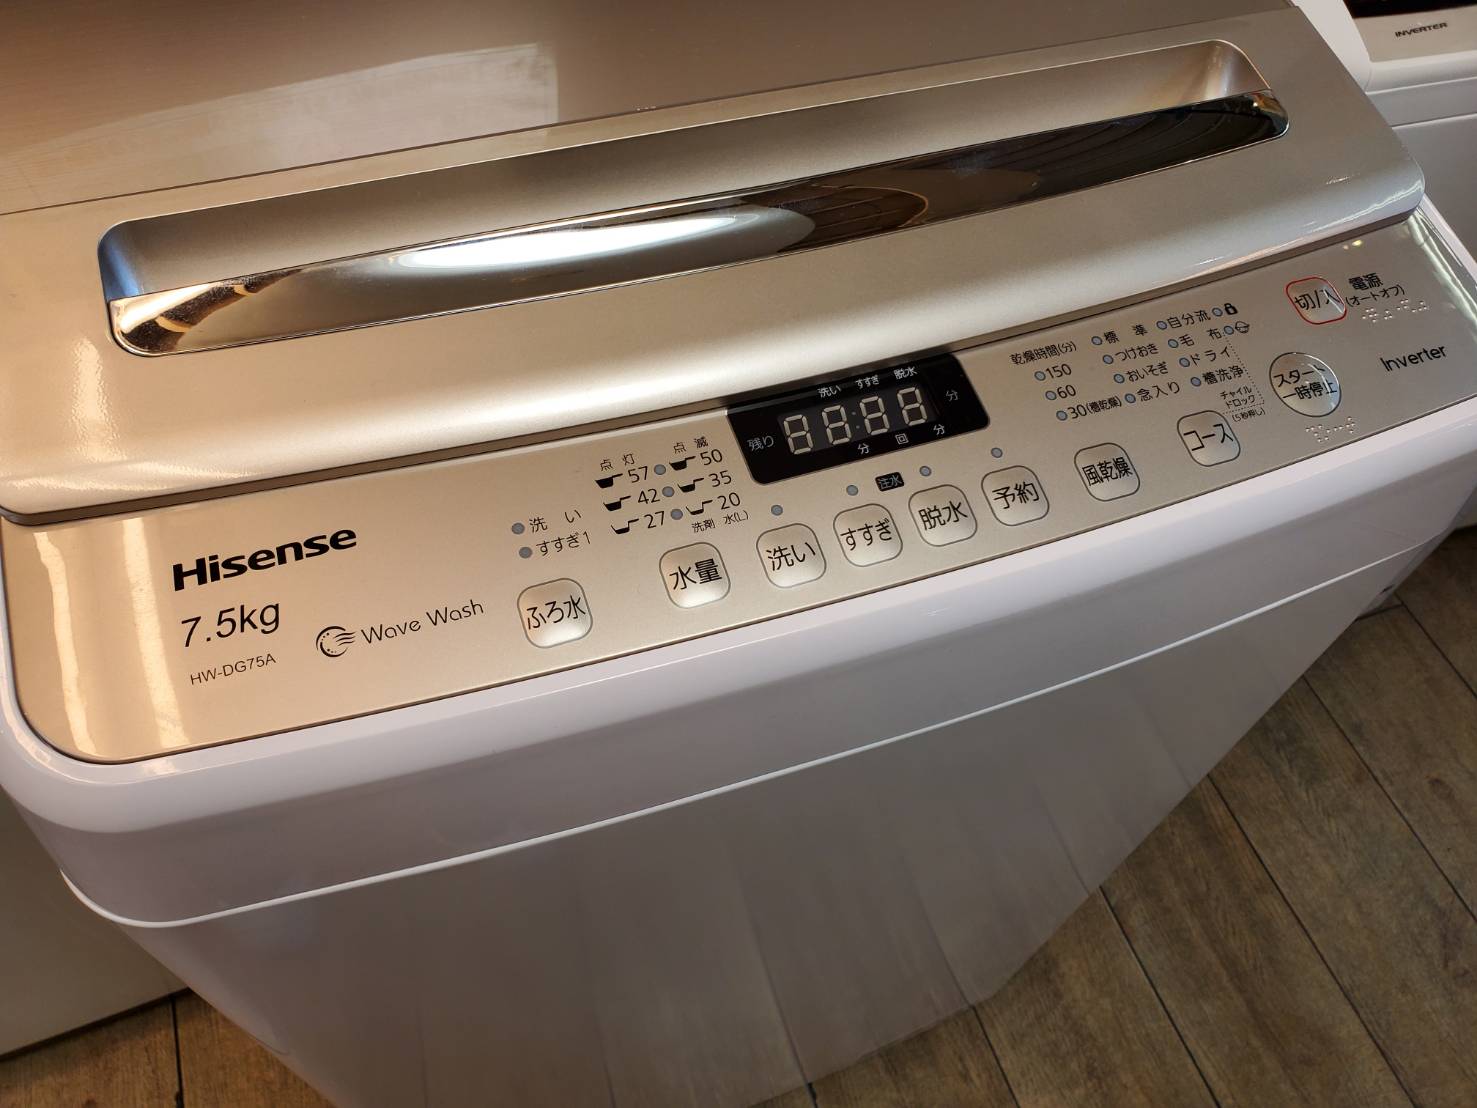 ☆Hisense ハイセンス 7.5㎏ 洗濯機 2019年製 全自動洗濯機 買取しました☆ | 愛知と岐阜のリサイクルショップ 再良市場